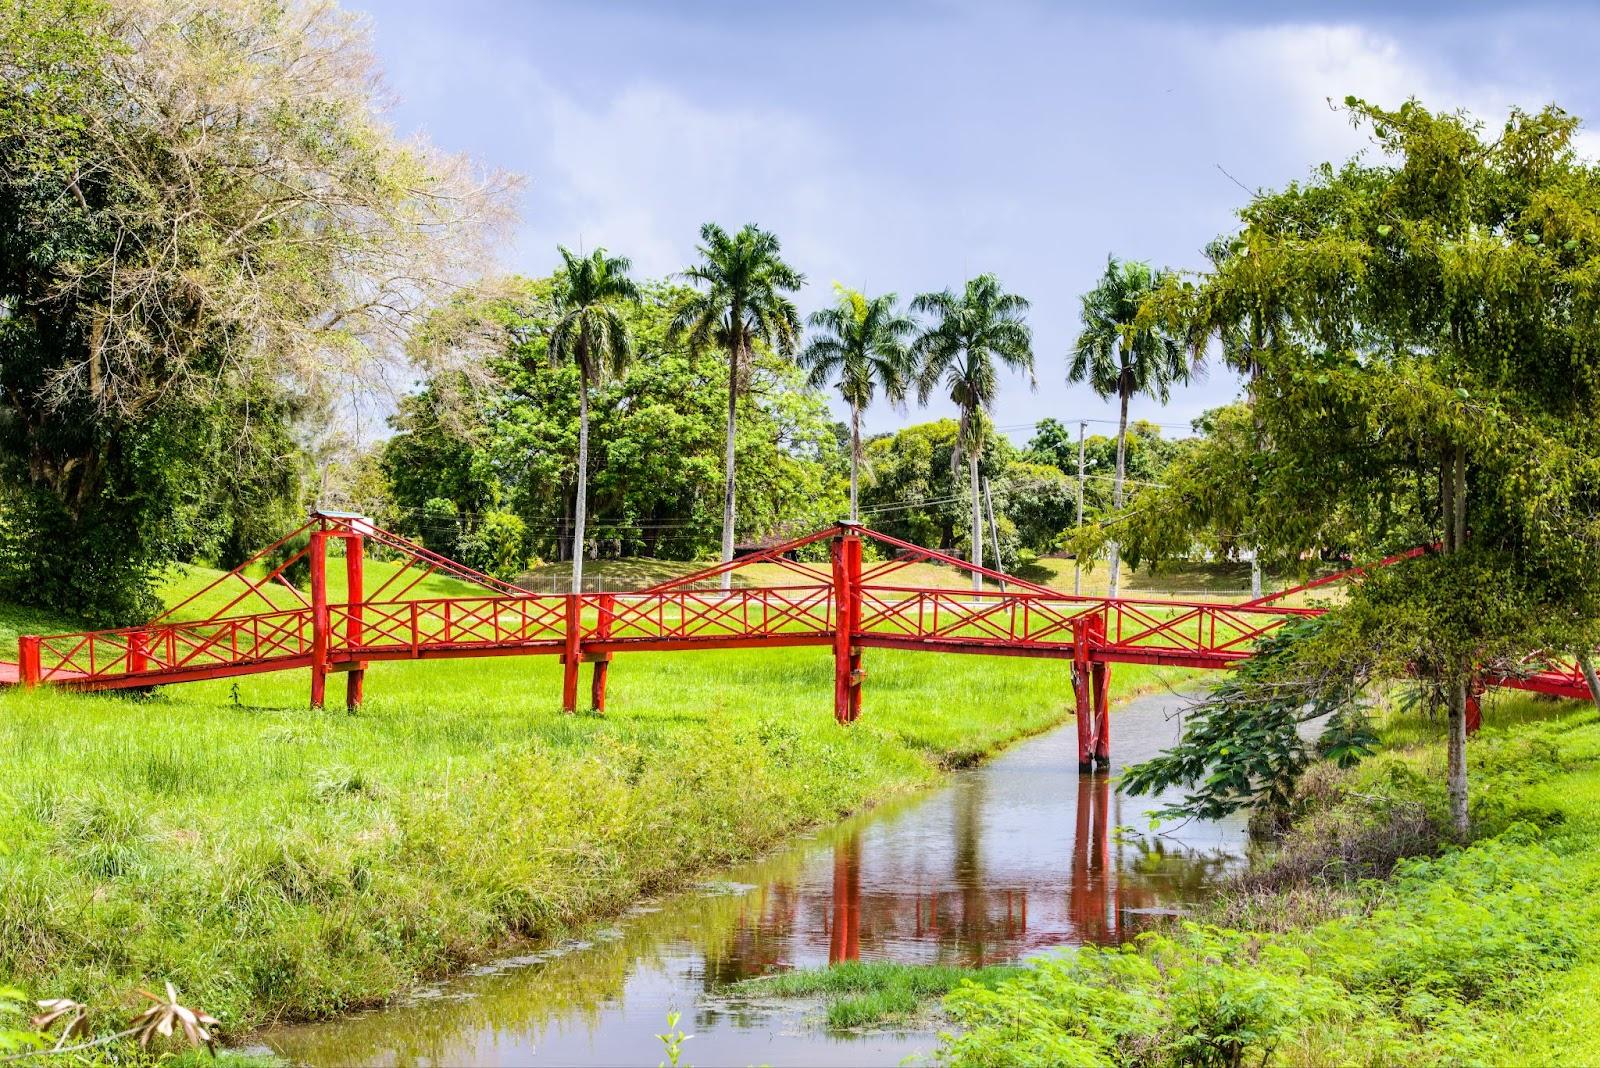 Red bridge over the river in Suriname
